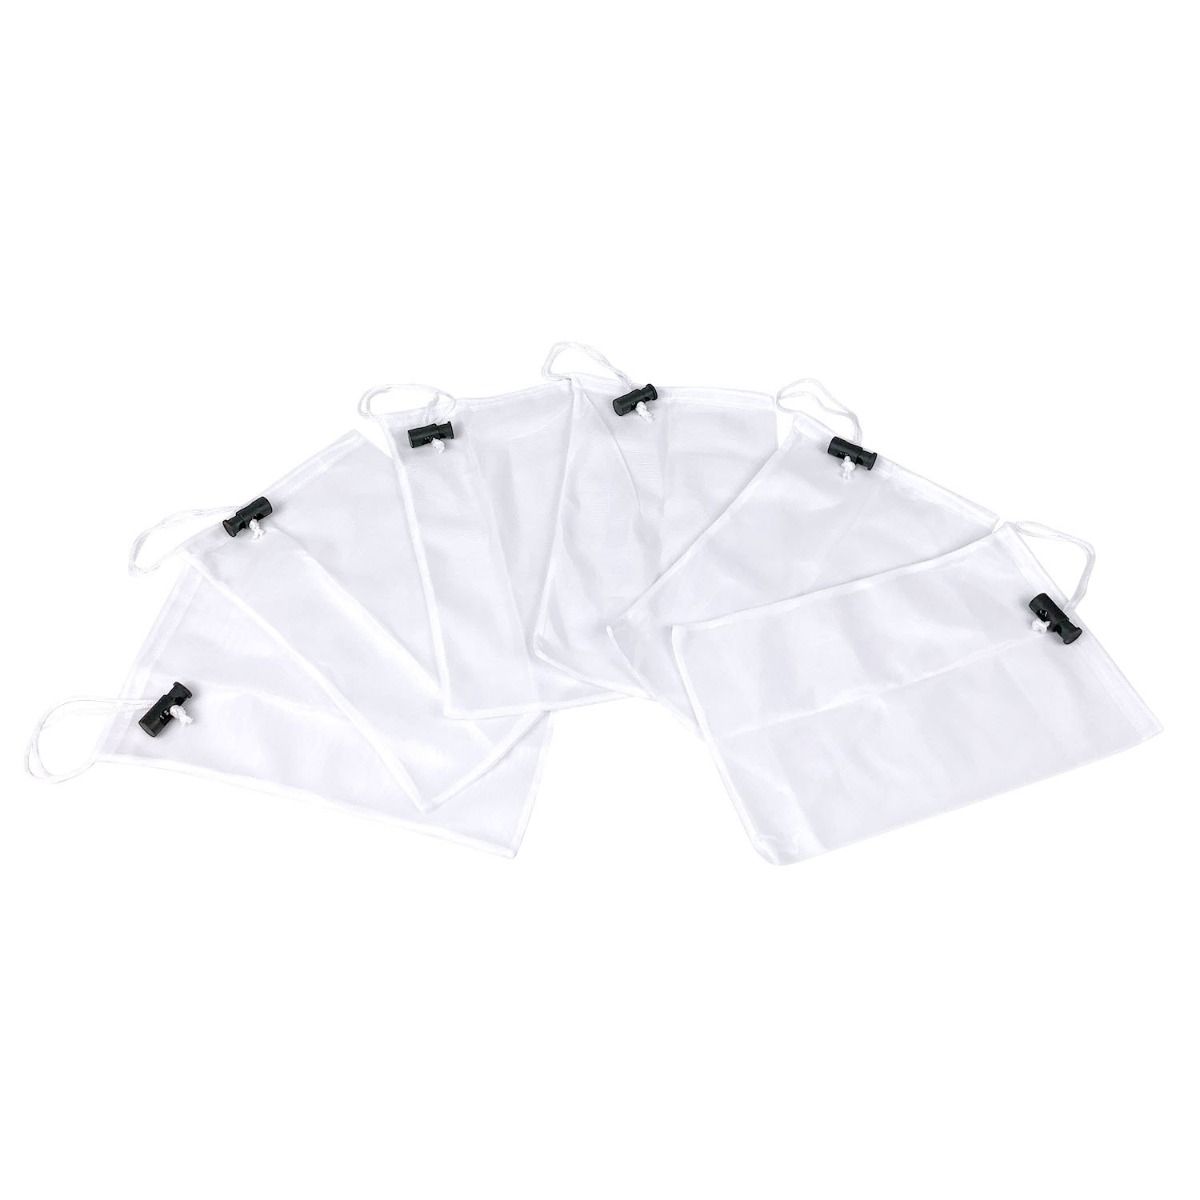 SR Aquaristik reusable and washable aquarium filter media bags in size - 6" x 10", 6 packs.